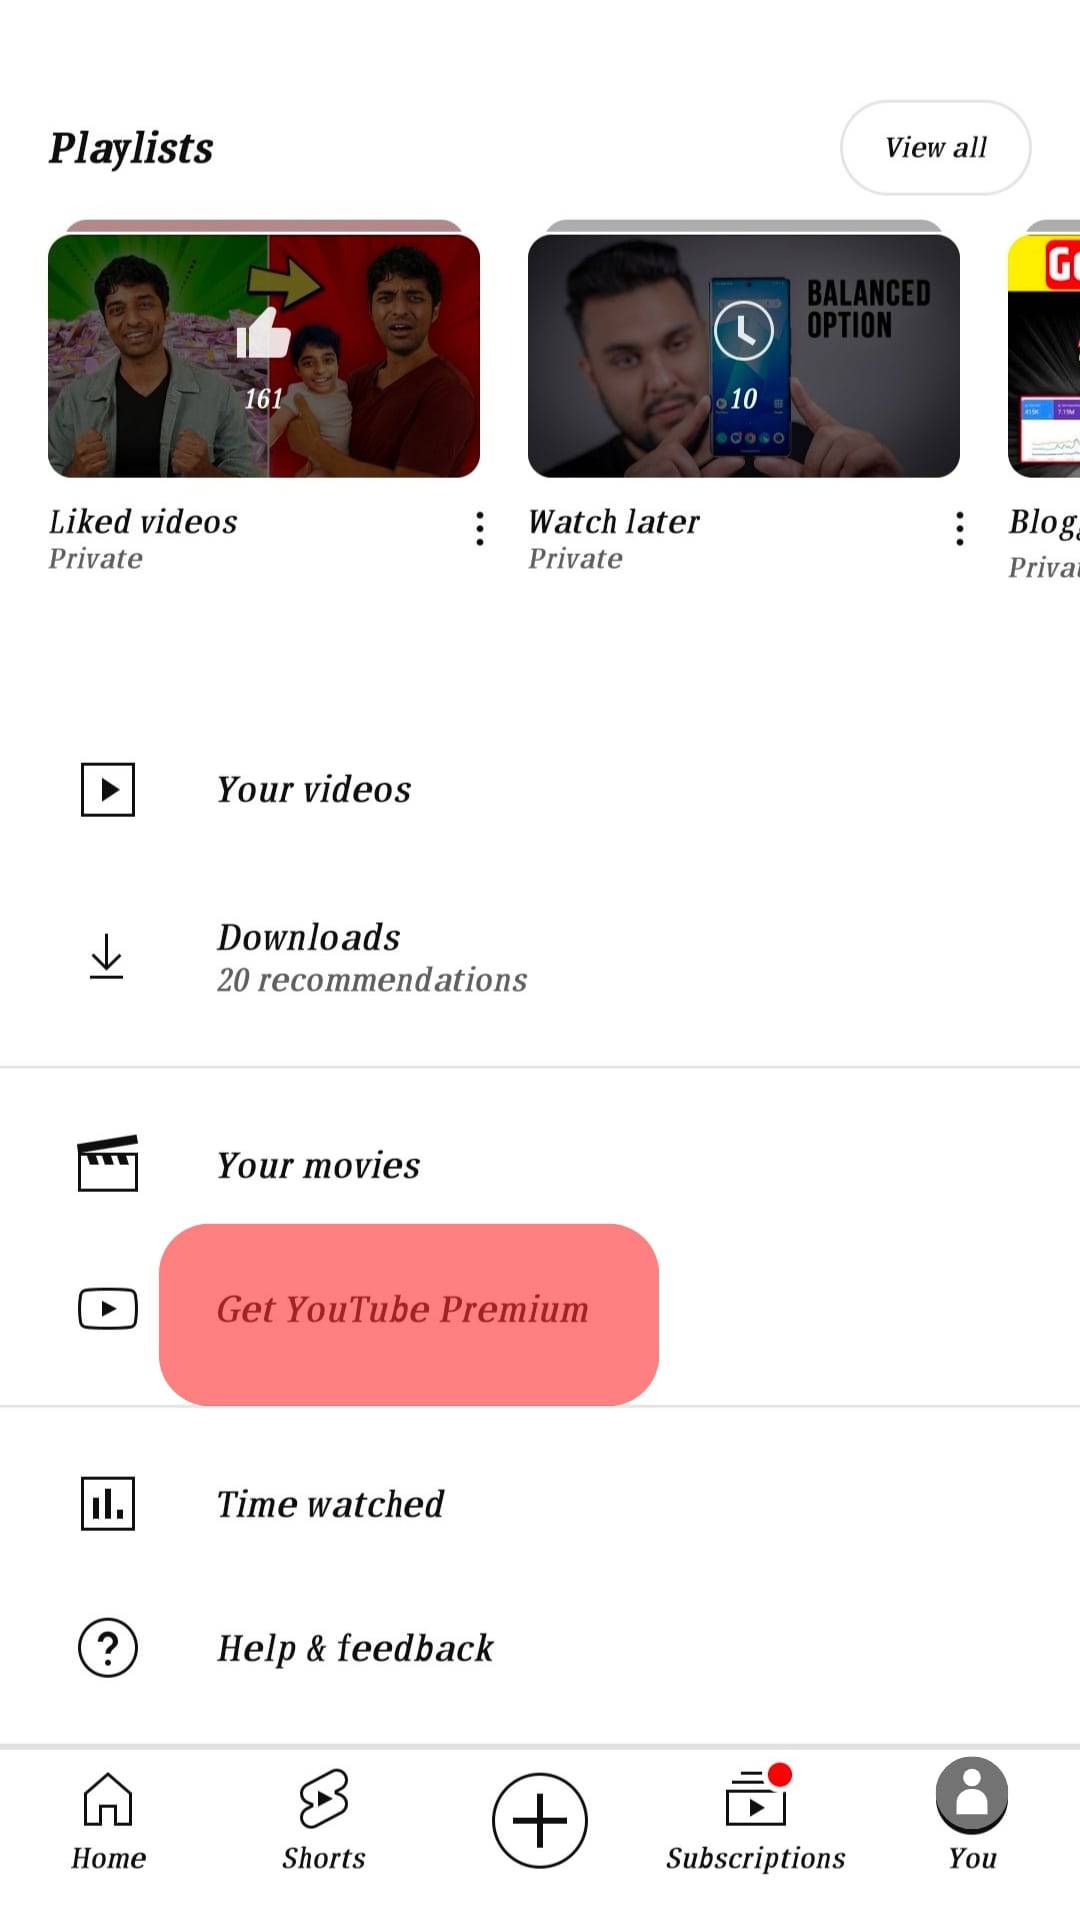 Select Get Youtube Premium.